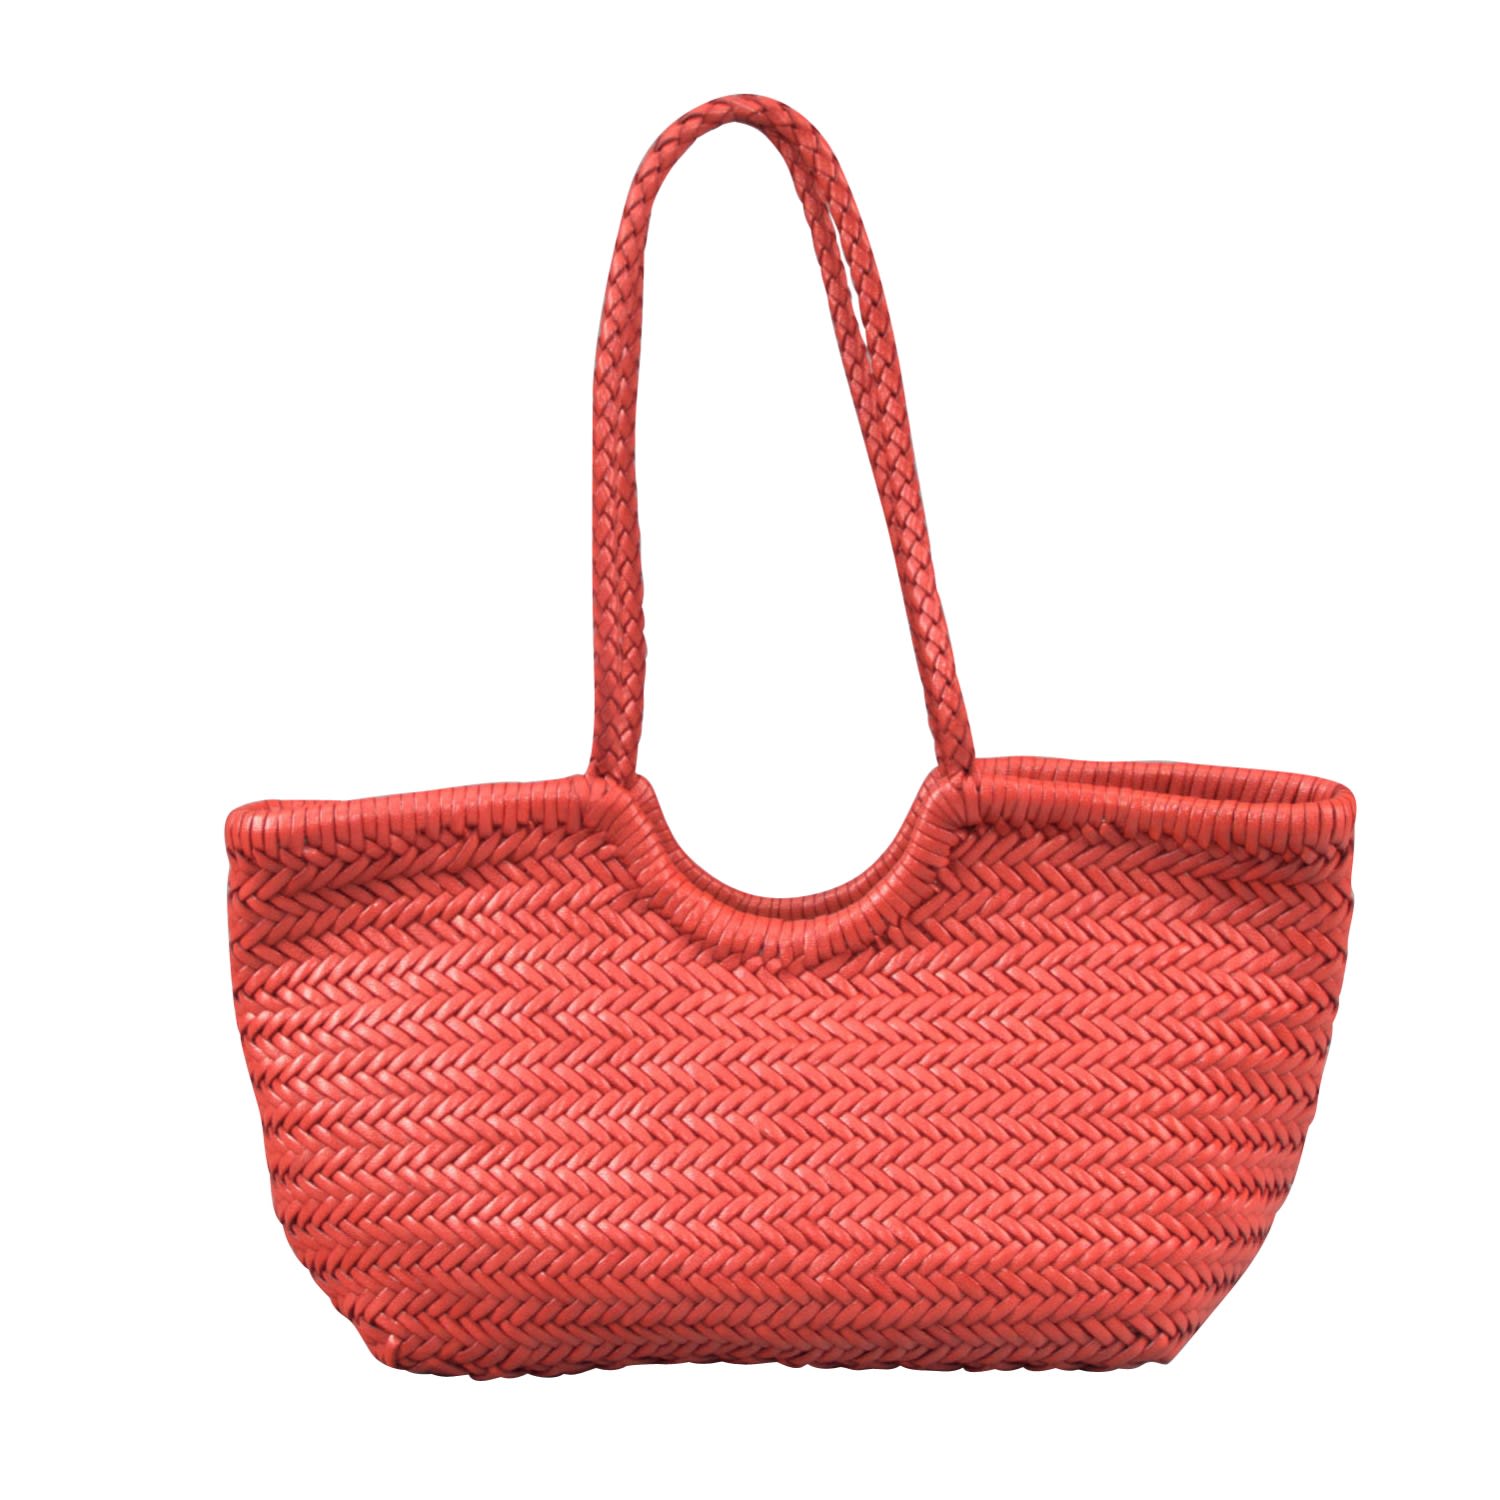 Women’s Woven Leather Beach Bag ’Alessia’ - Red Rimini